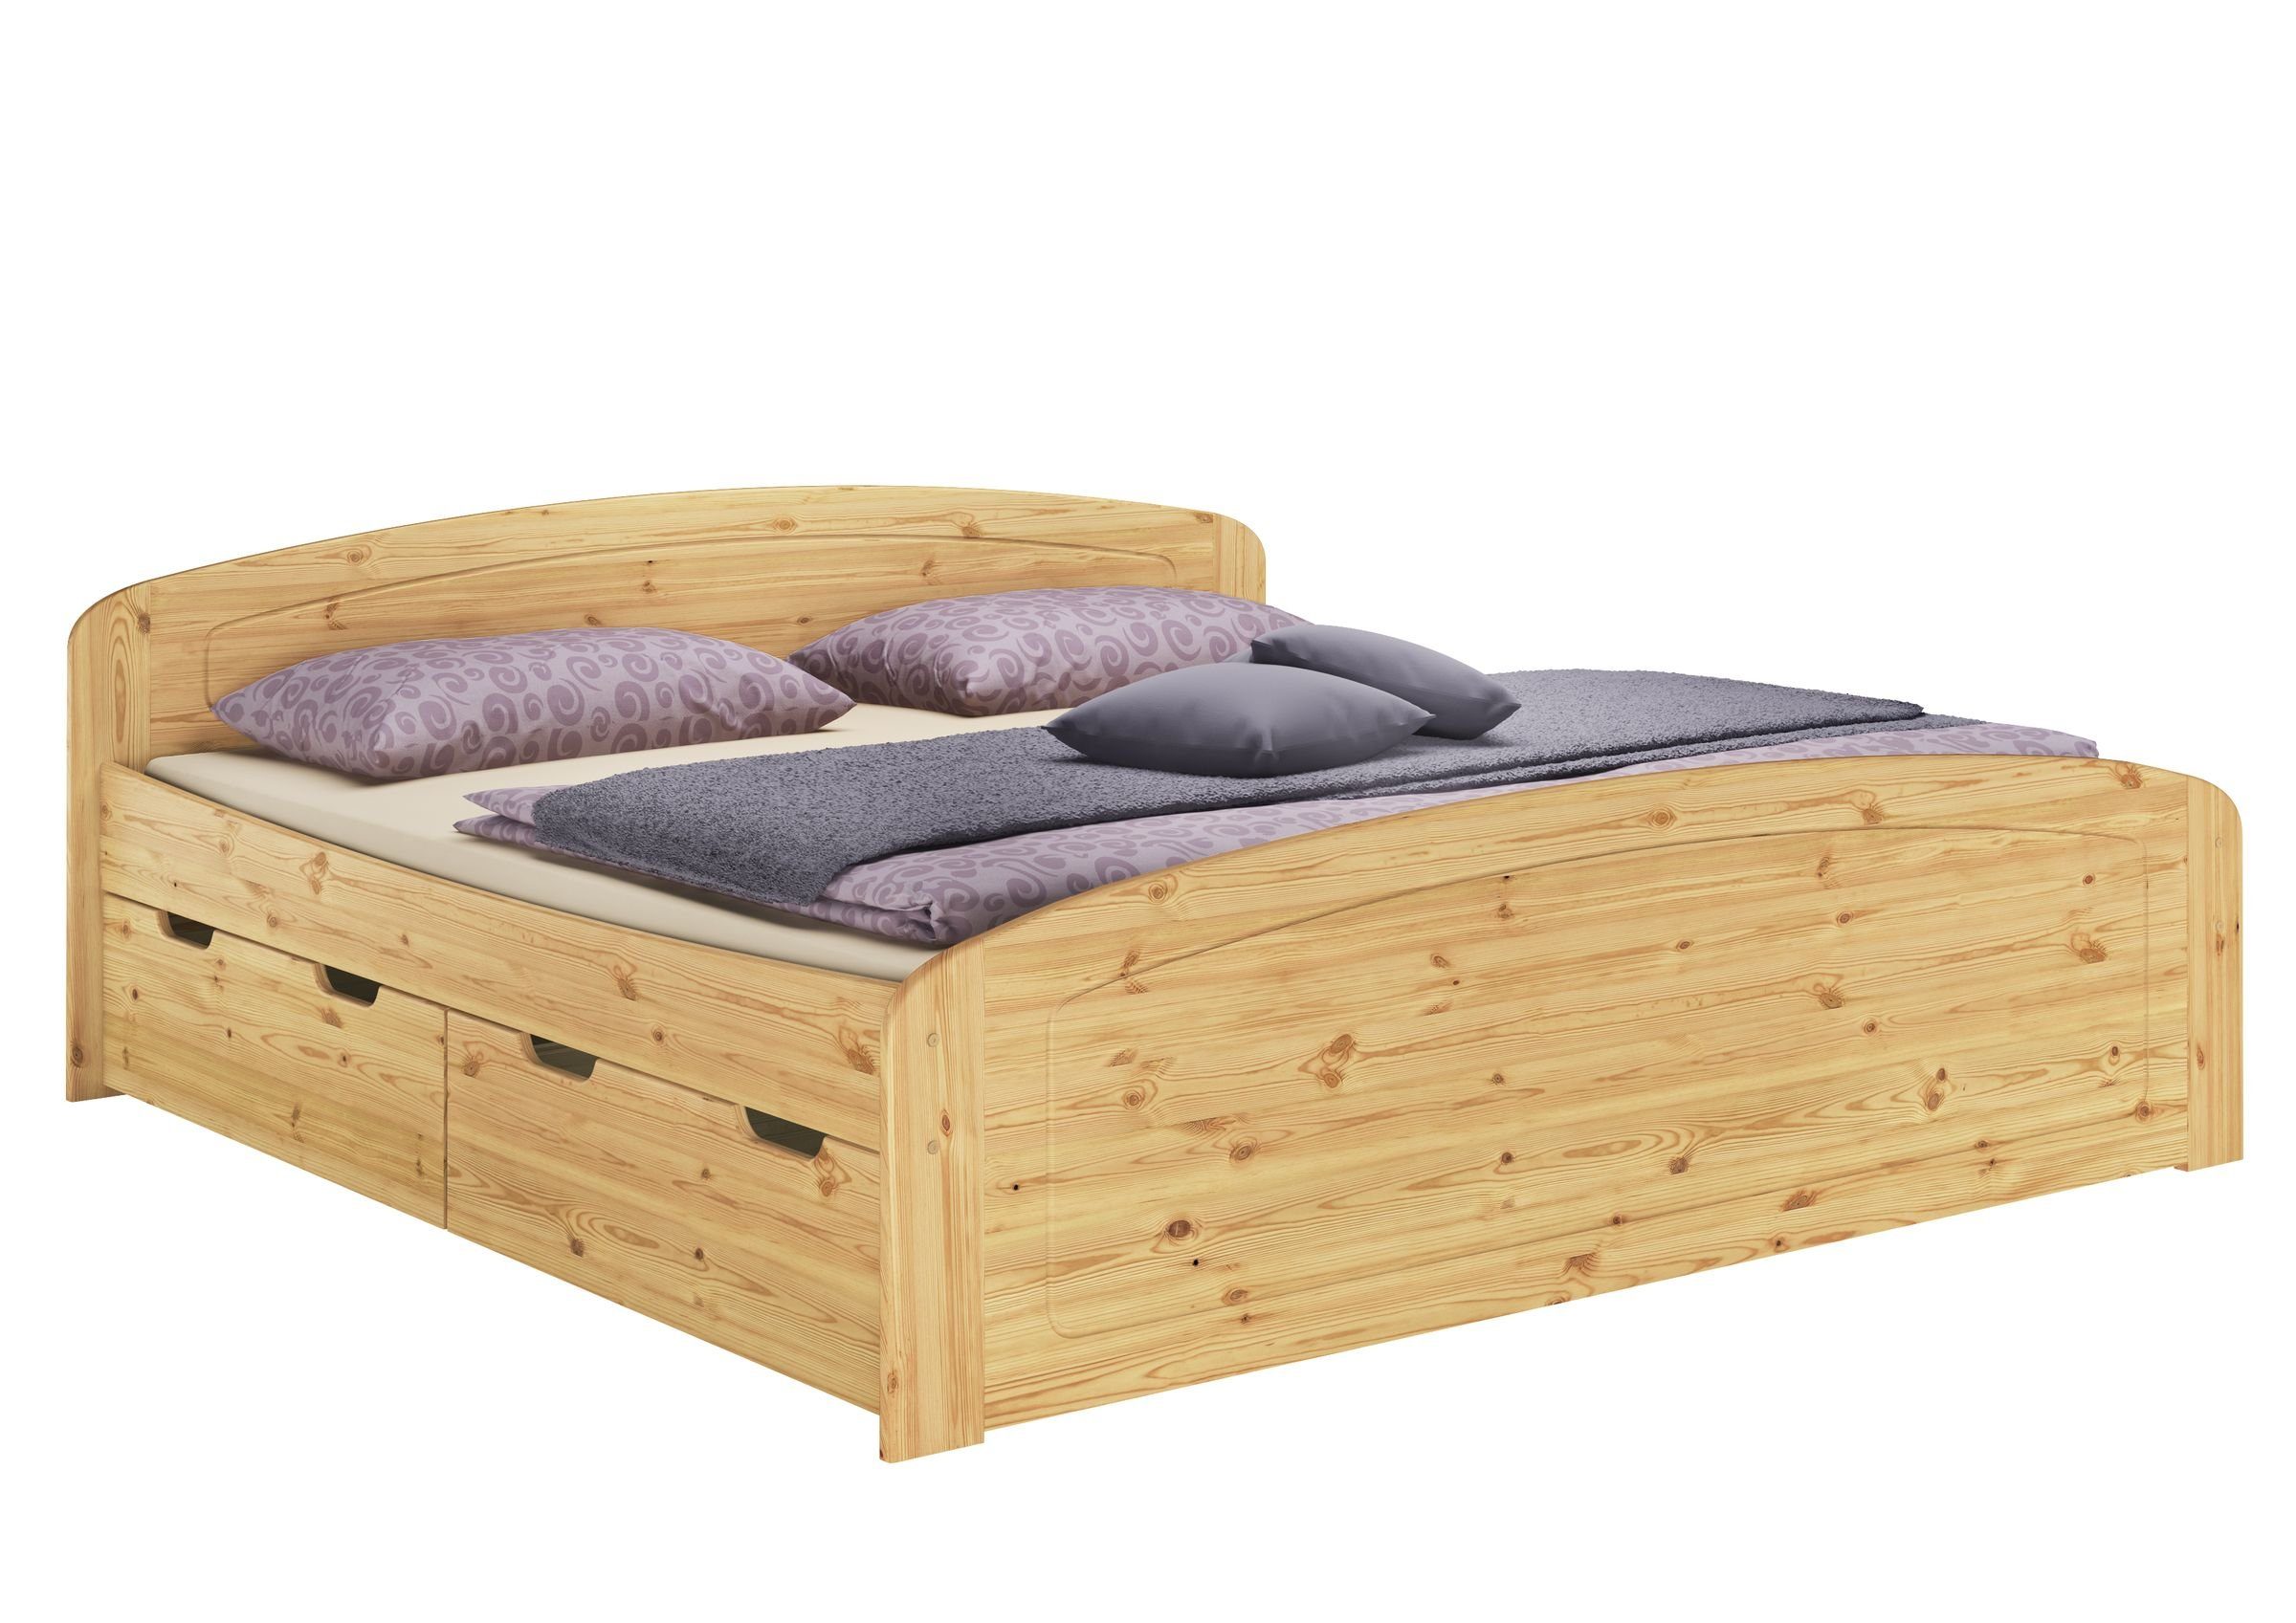 ERST-HOLZ Bett Doppelbett 180x200 Kiefer + Bettkästen+Federleisten+Matratzen, Kieferfarblos lackiert